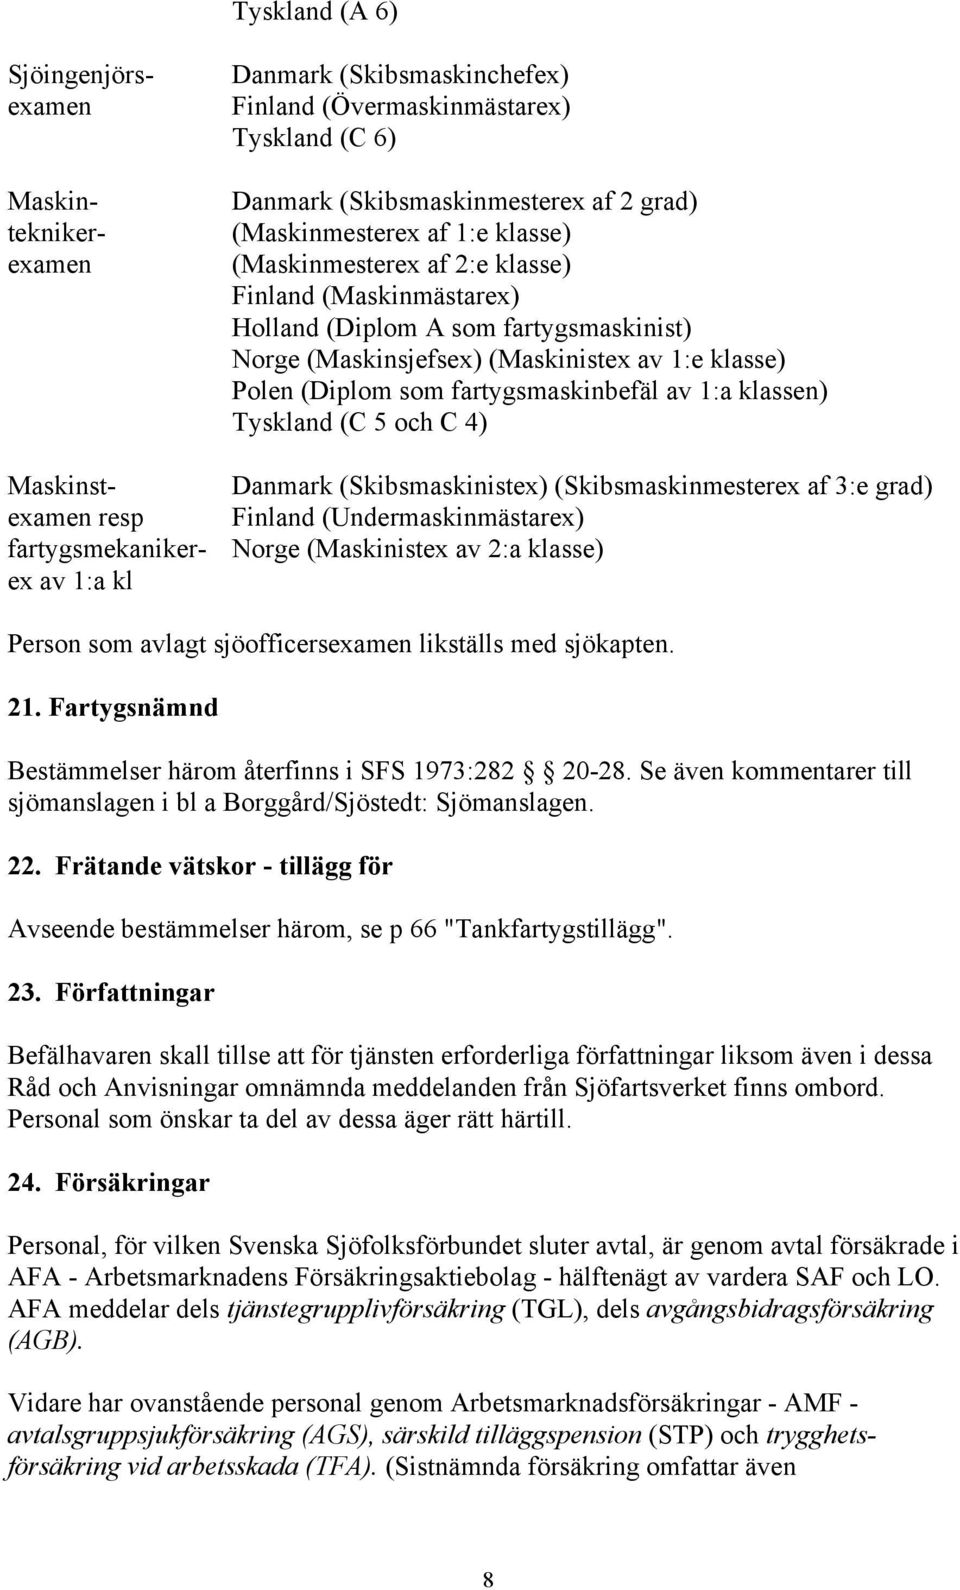 Tyskland (C 5 och C 4) Maskinst- Danmark (Skibsmaskinistex) (Skibsmaskinmesterex af 3:e grad) examen resp Finland (Undermaskinmästarex) fartygsmekaniker- Norge (Maskinistex av 2:a klasse) ex av 1:a